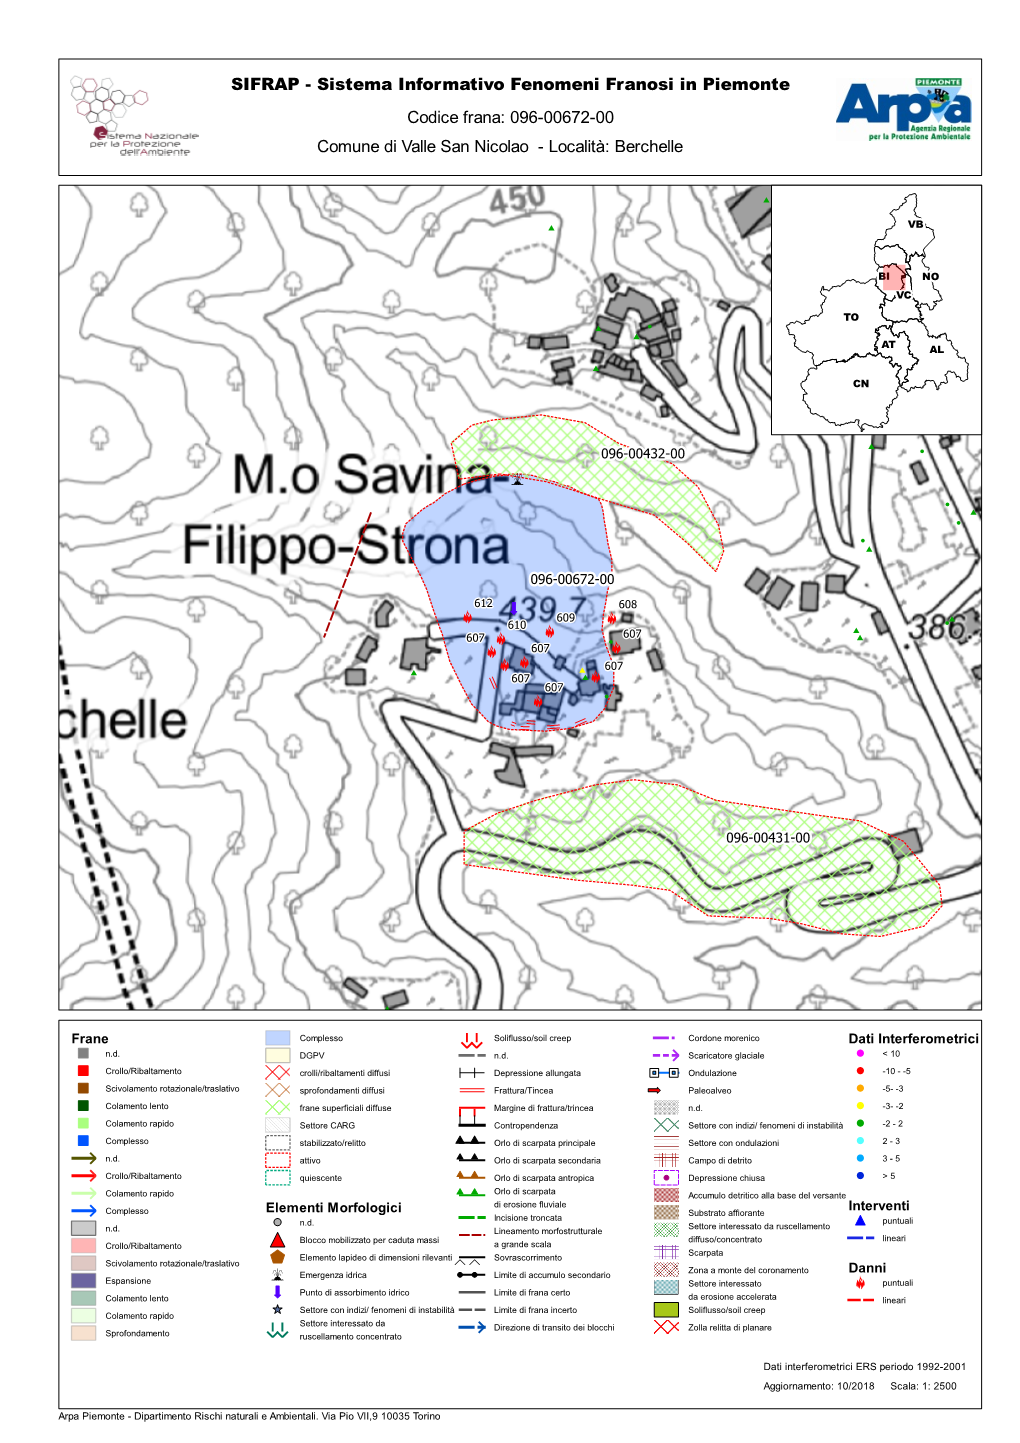 SIFRAP - Sistema Informativo Fenomeni Franosi in Piemonte